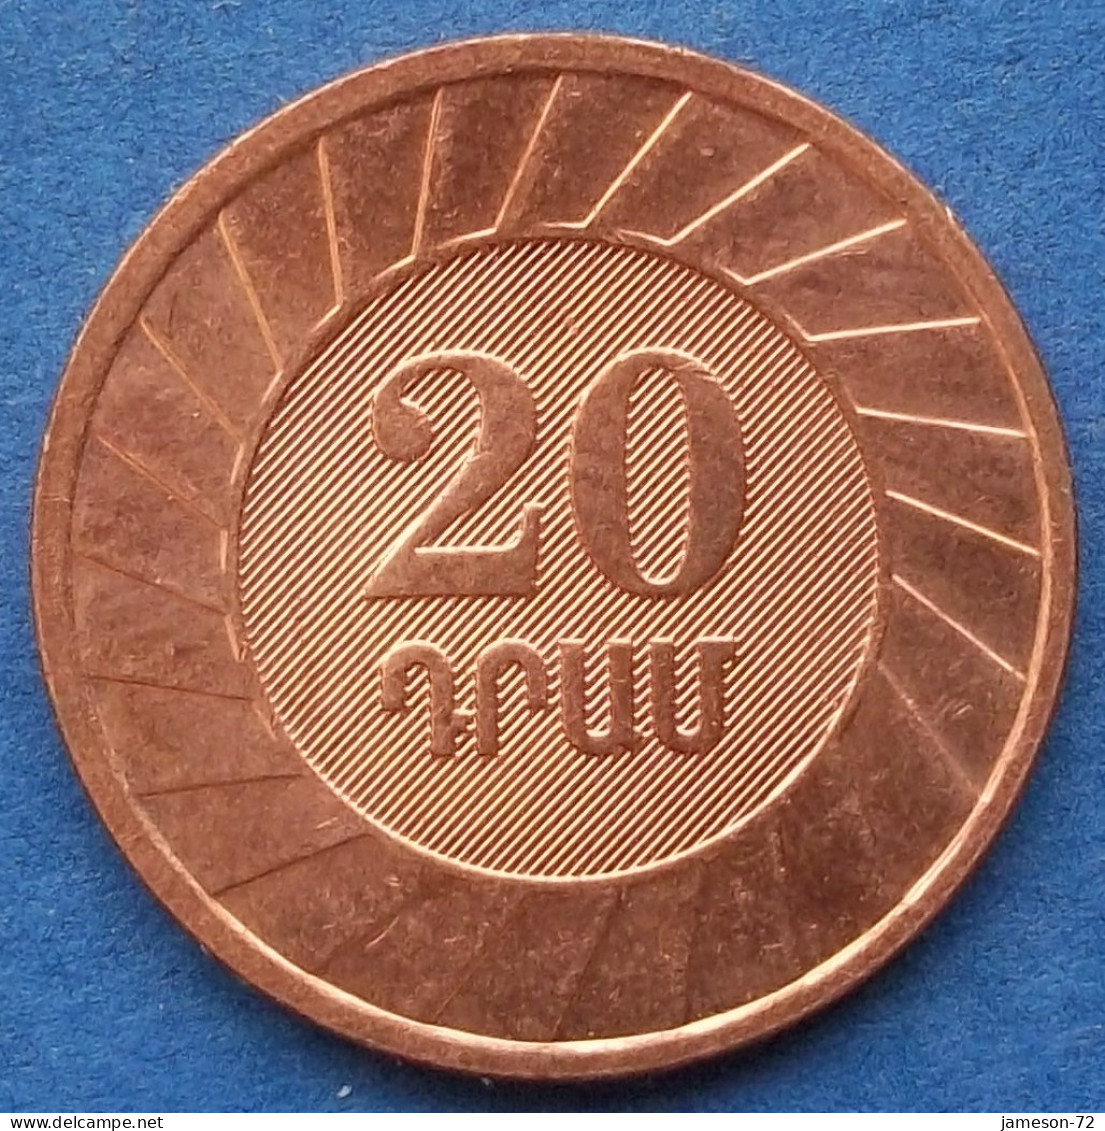 ARMENIA - 20 Dram 2003 KM# 93 Independent Republic (1991) - Edelweiss Coins - Armenië